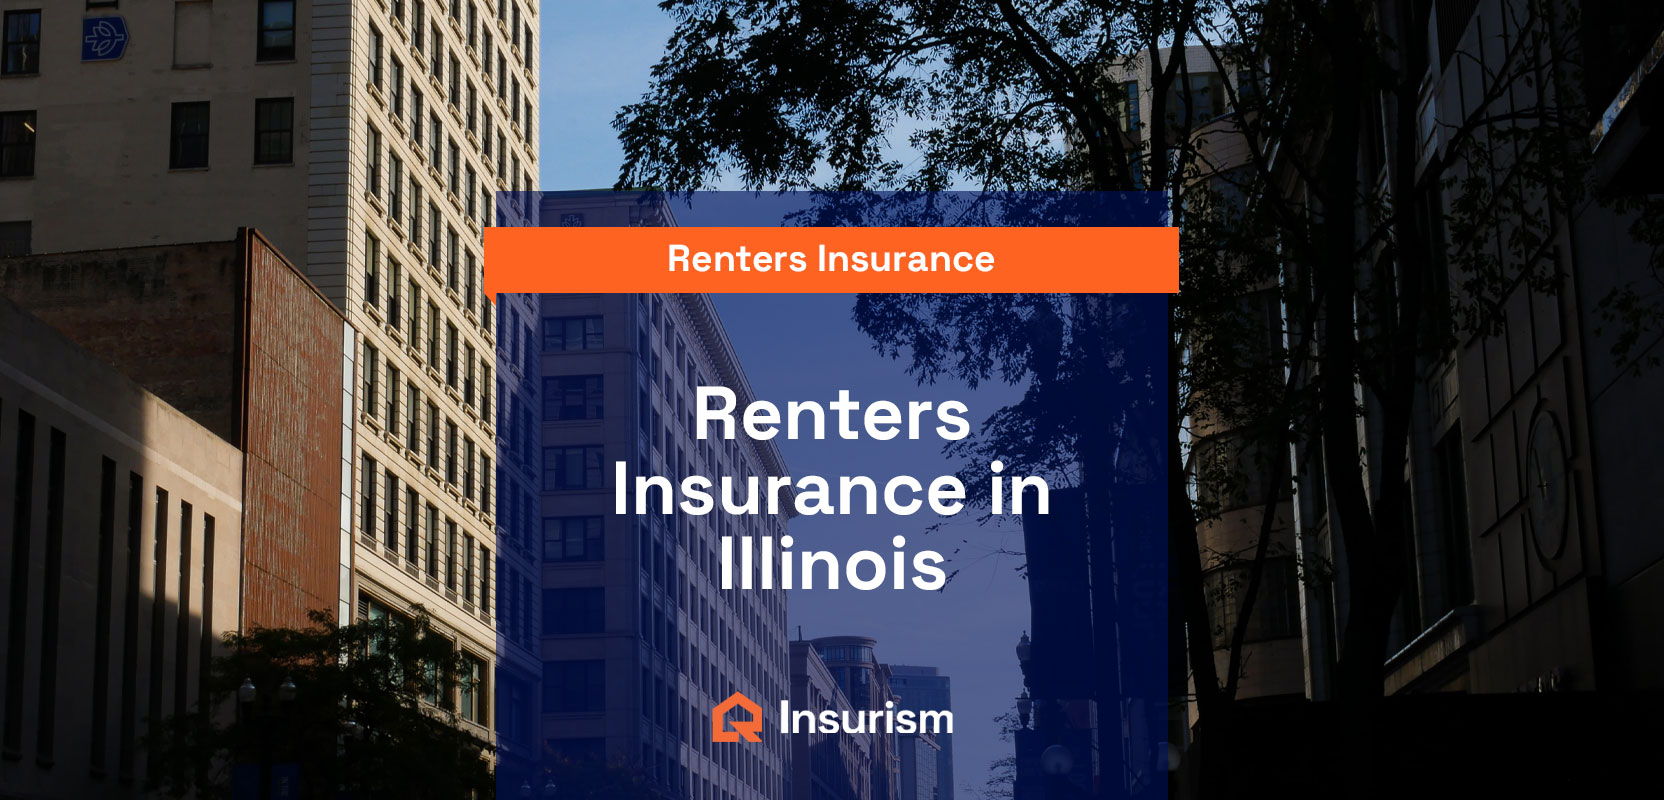 Renters insurance in Illinois